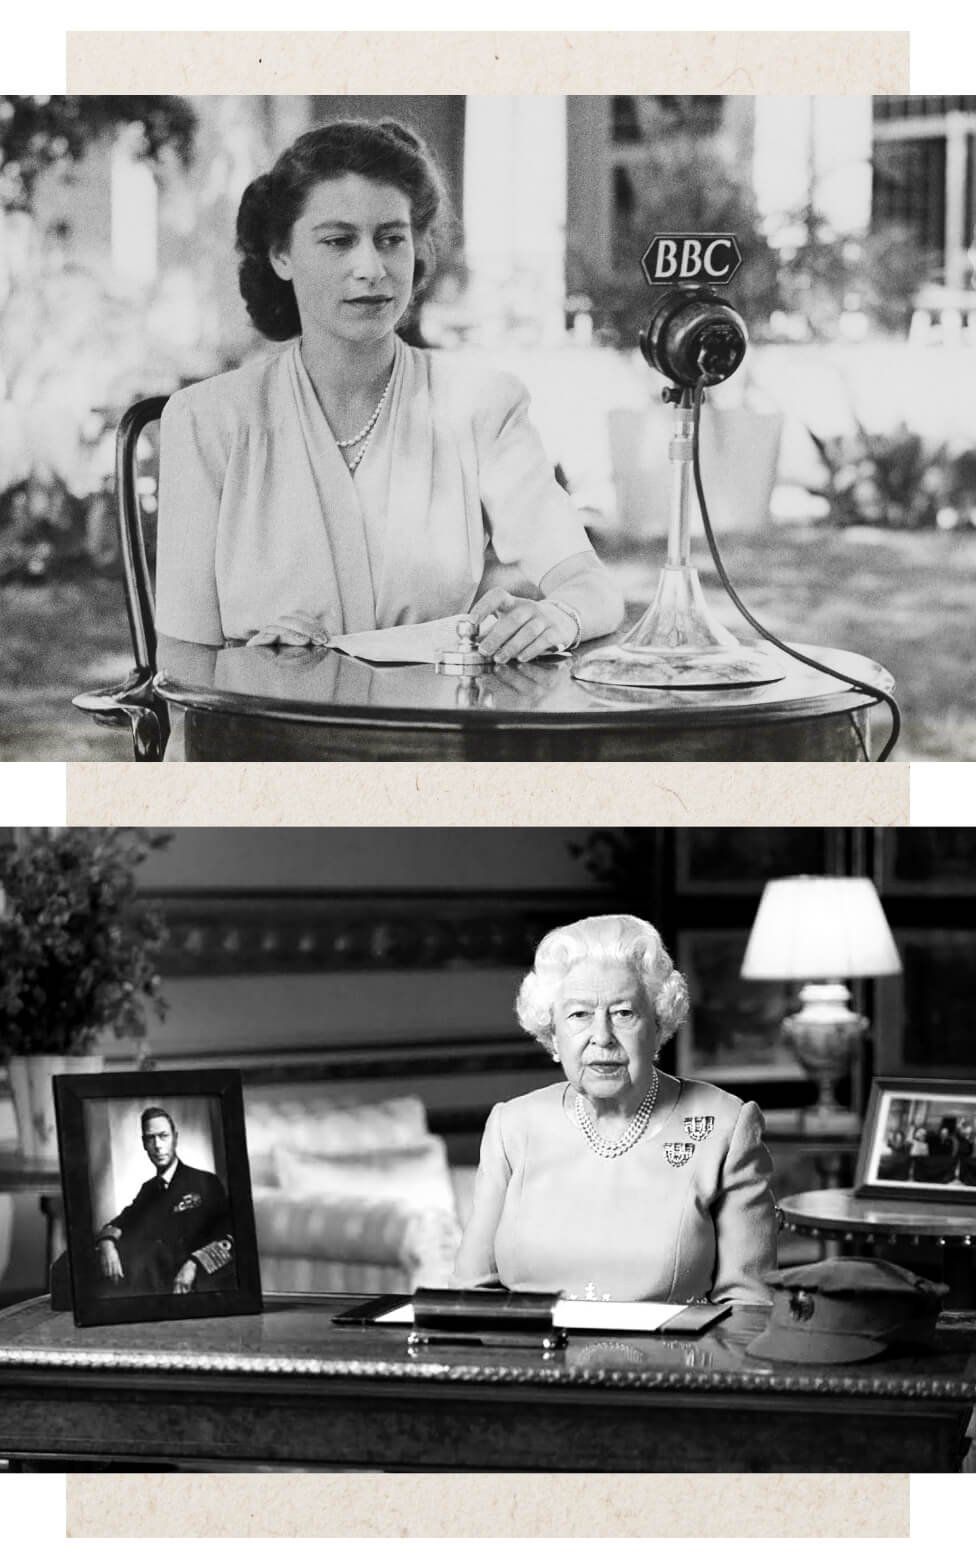 Death of Queen Elizabeth II The moment photo